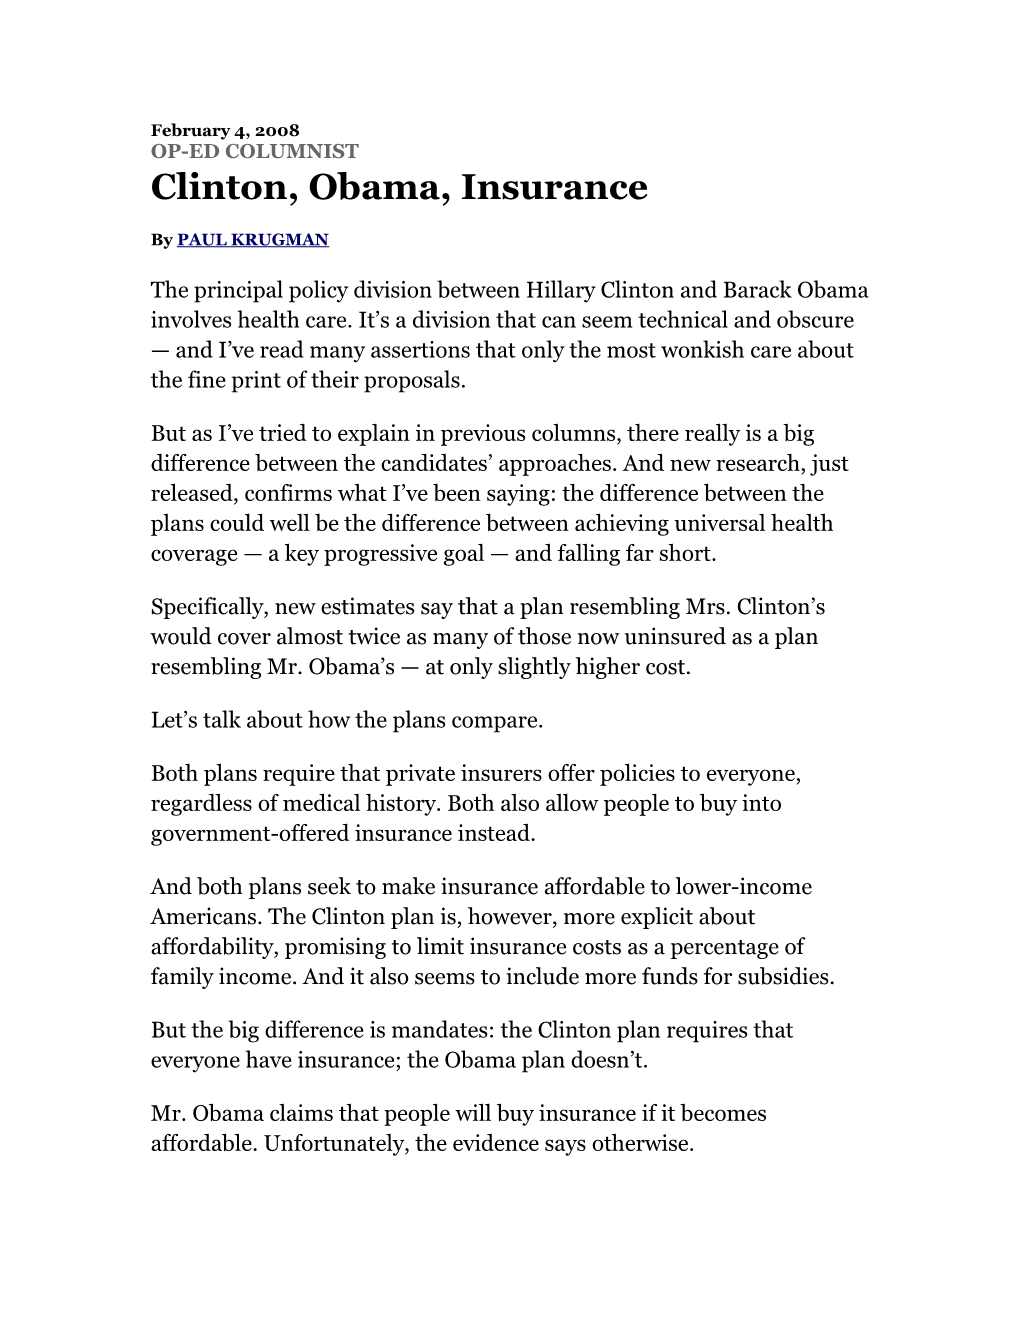 Clinton, Obama, Insurance